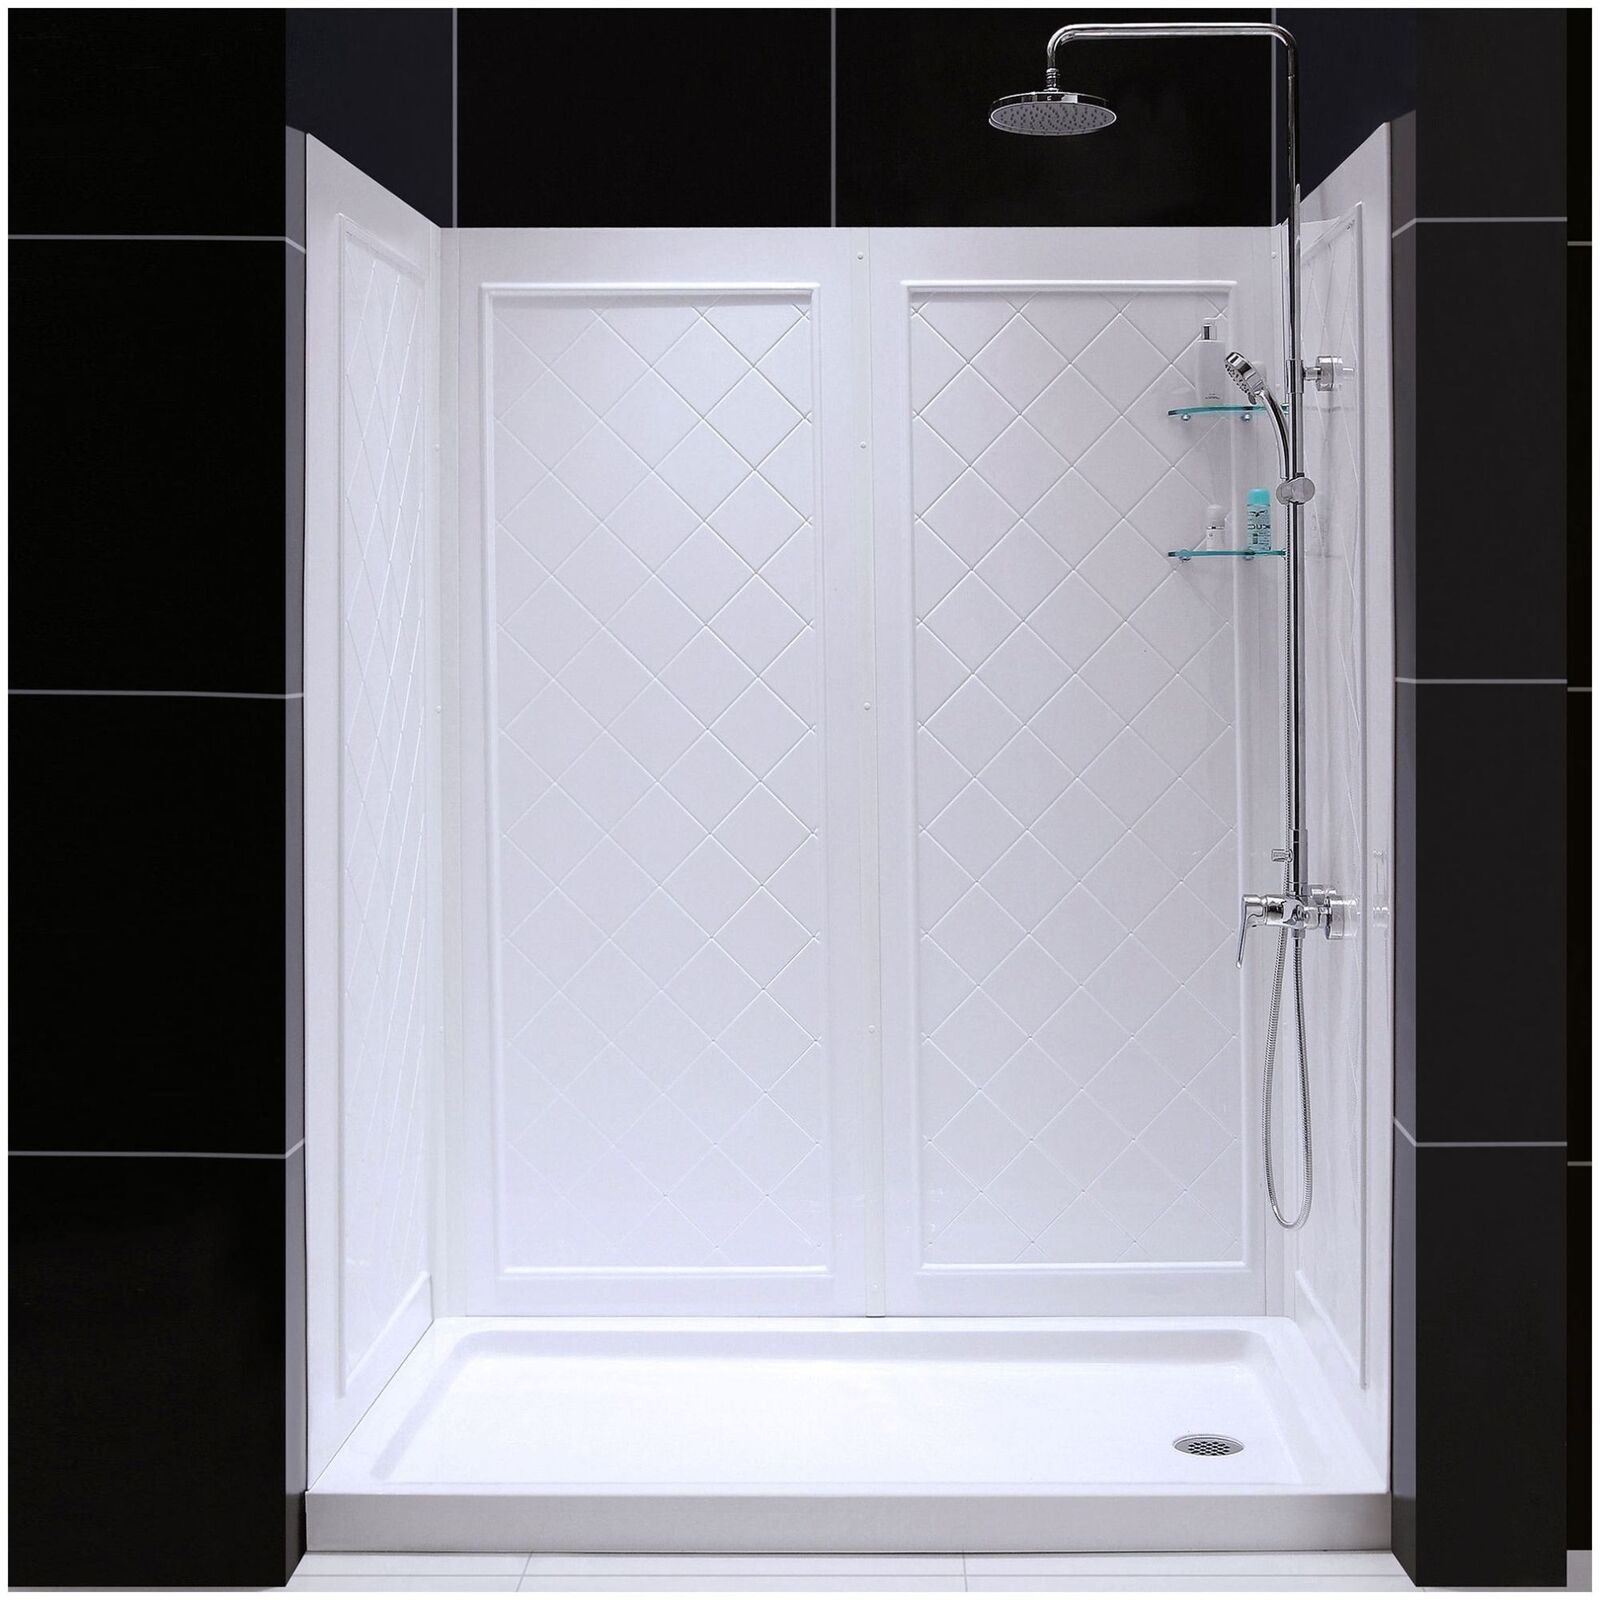 Dreamline Dl-6190 Slimline Shower Installation Package - White